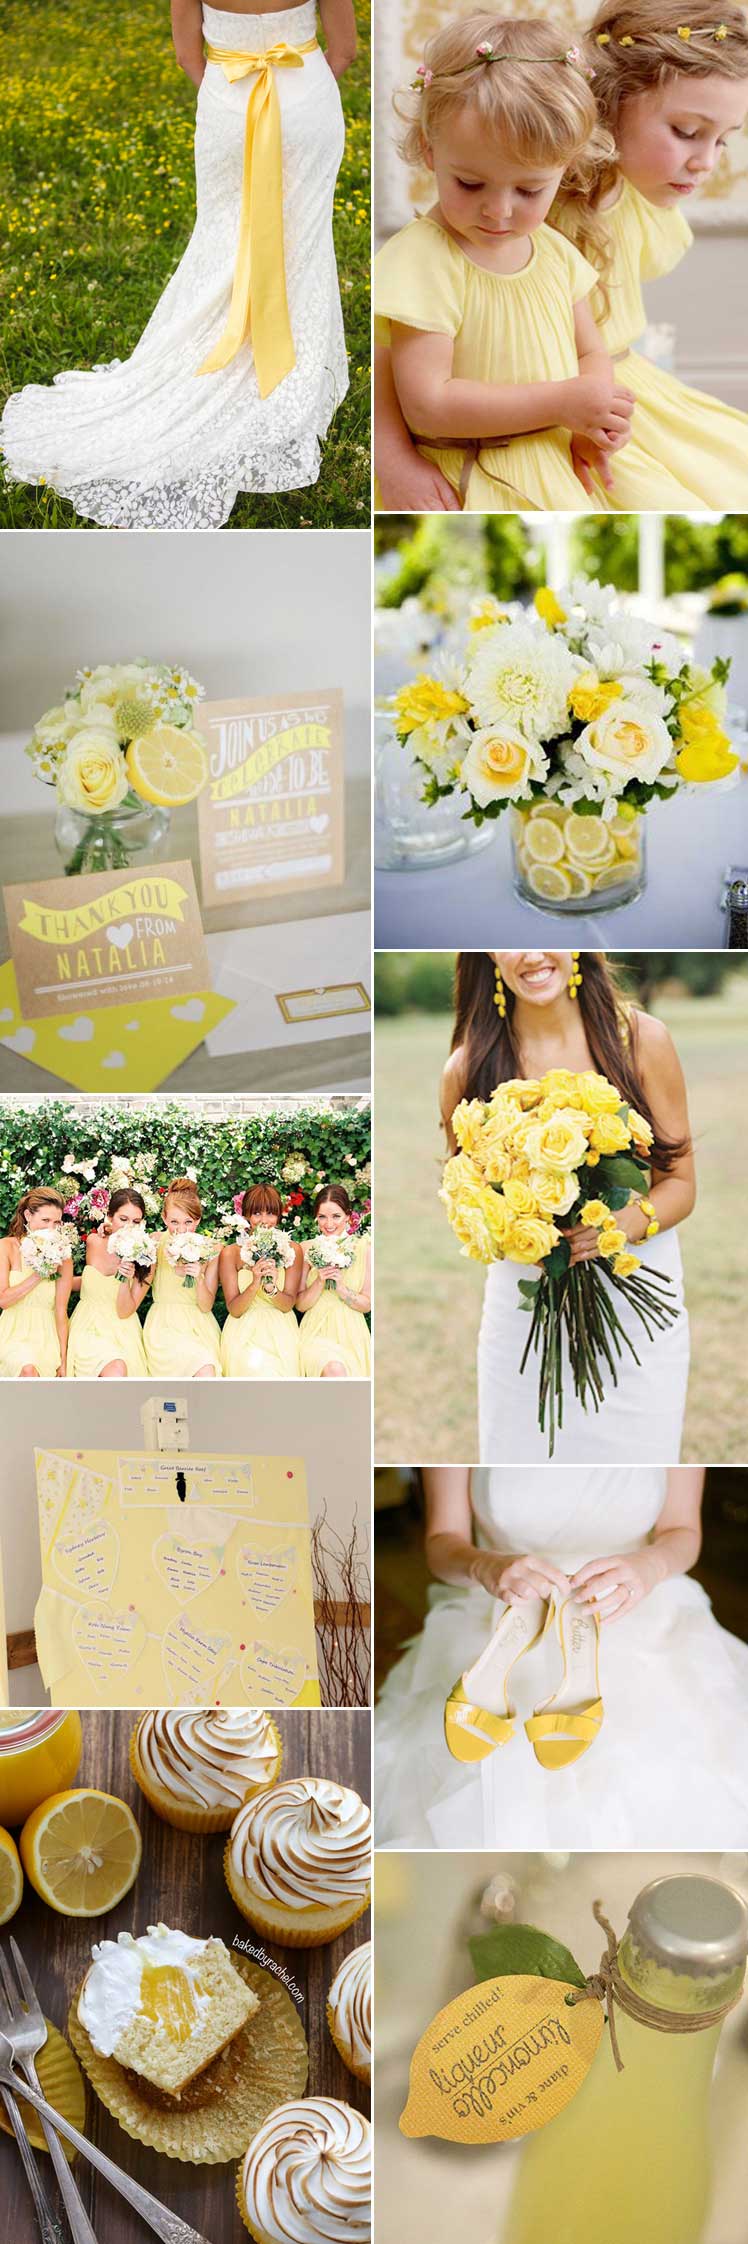 Lemon sorbet wedding inspiration